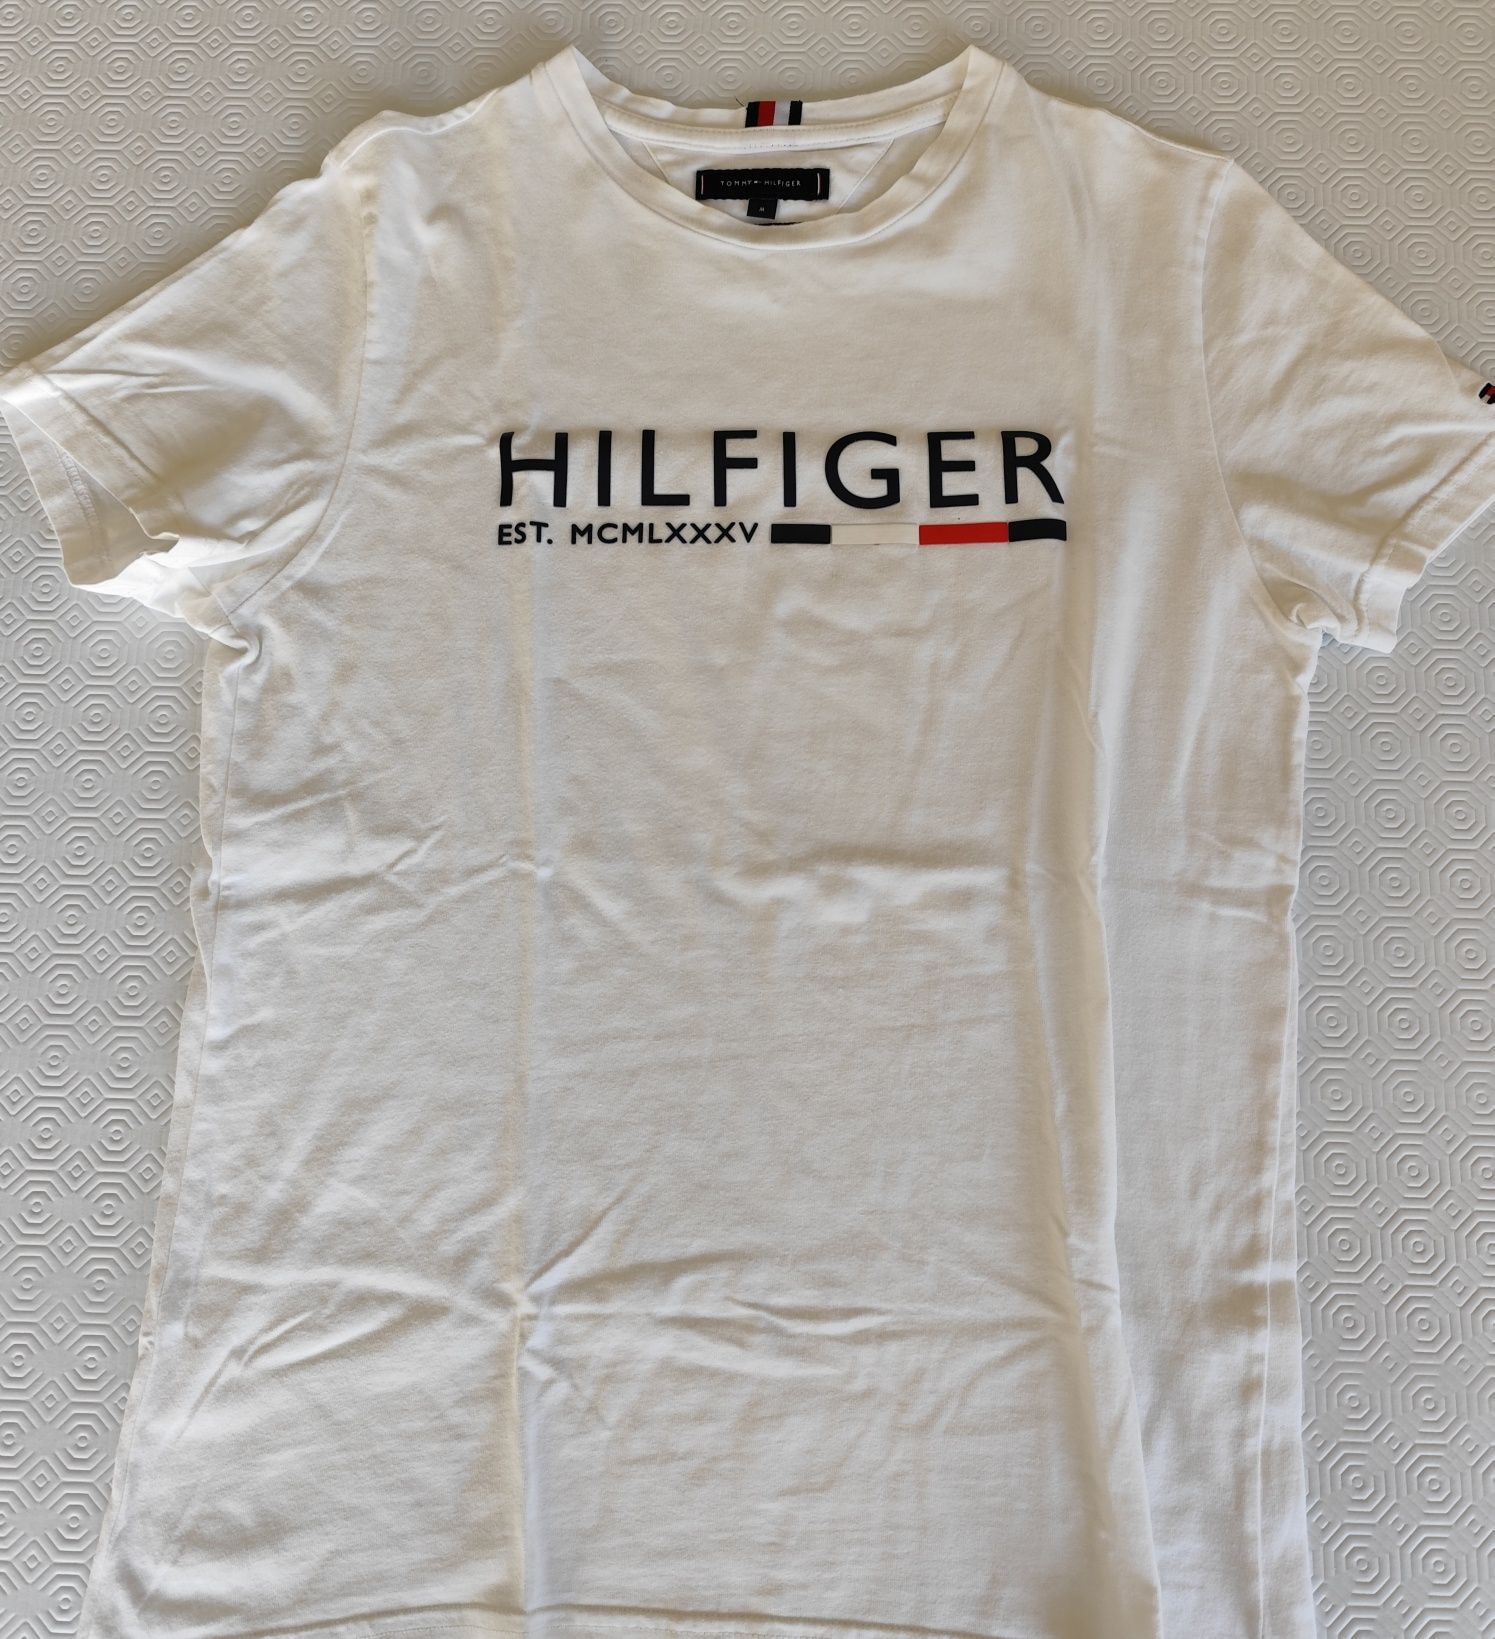 T-shirt Tommy Hilfiger Original - Tamanho M